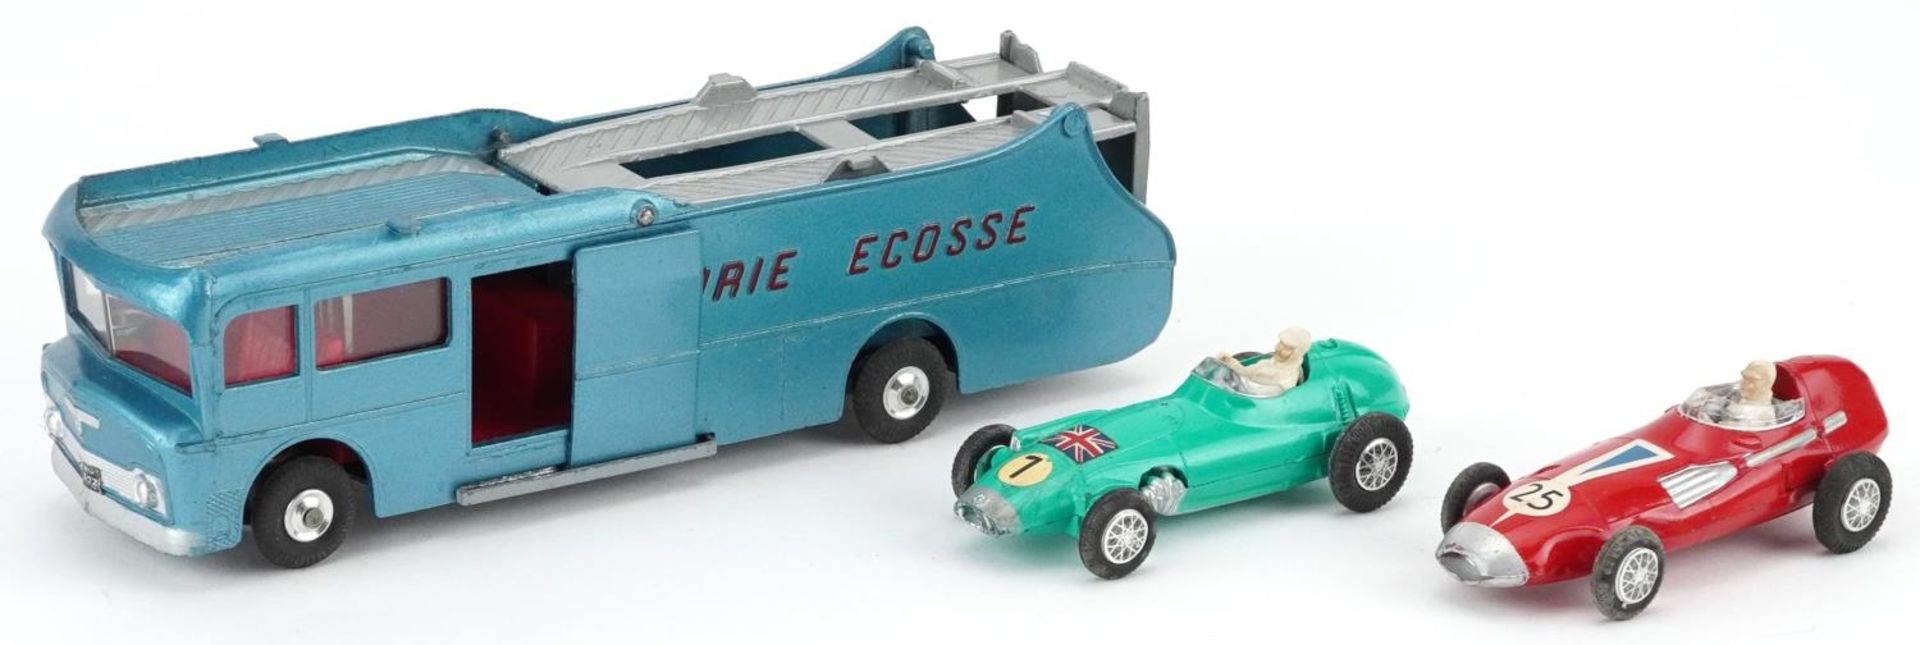 Vintage Corgi Major diecast Ecurie Ecosse racing car transporter with racing cars, gift set no 16 - Bild 2 aus 6